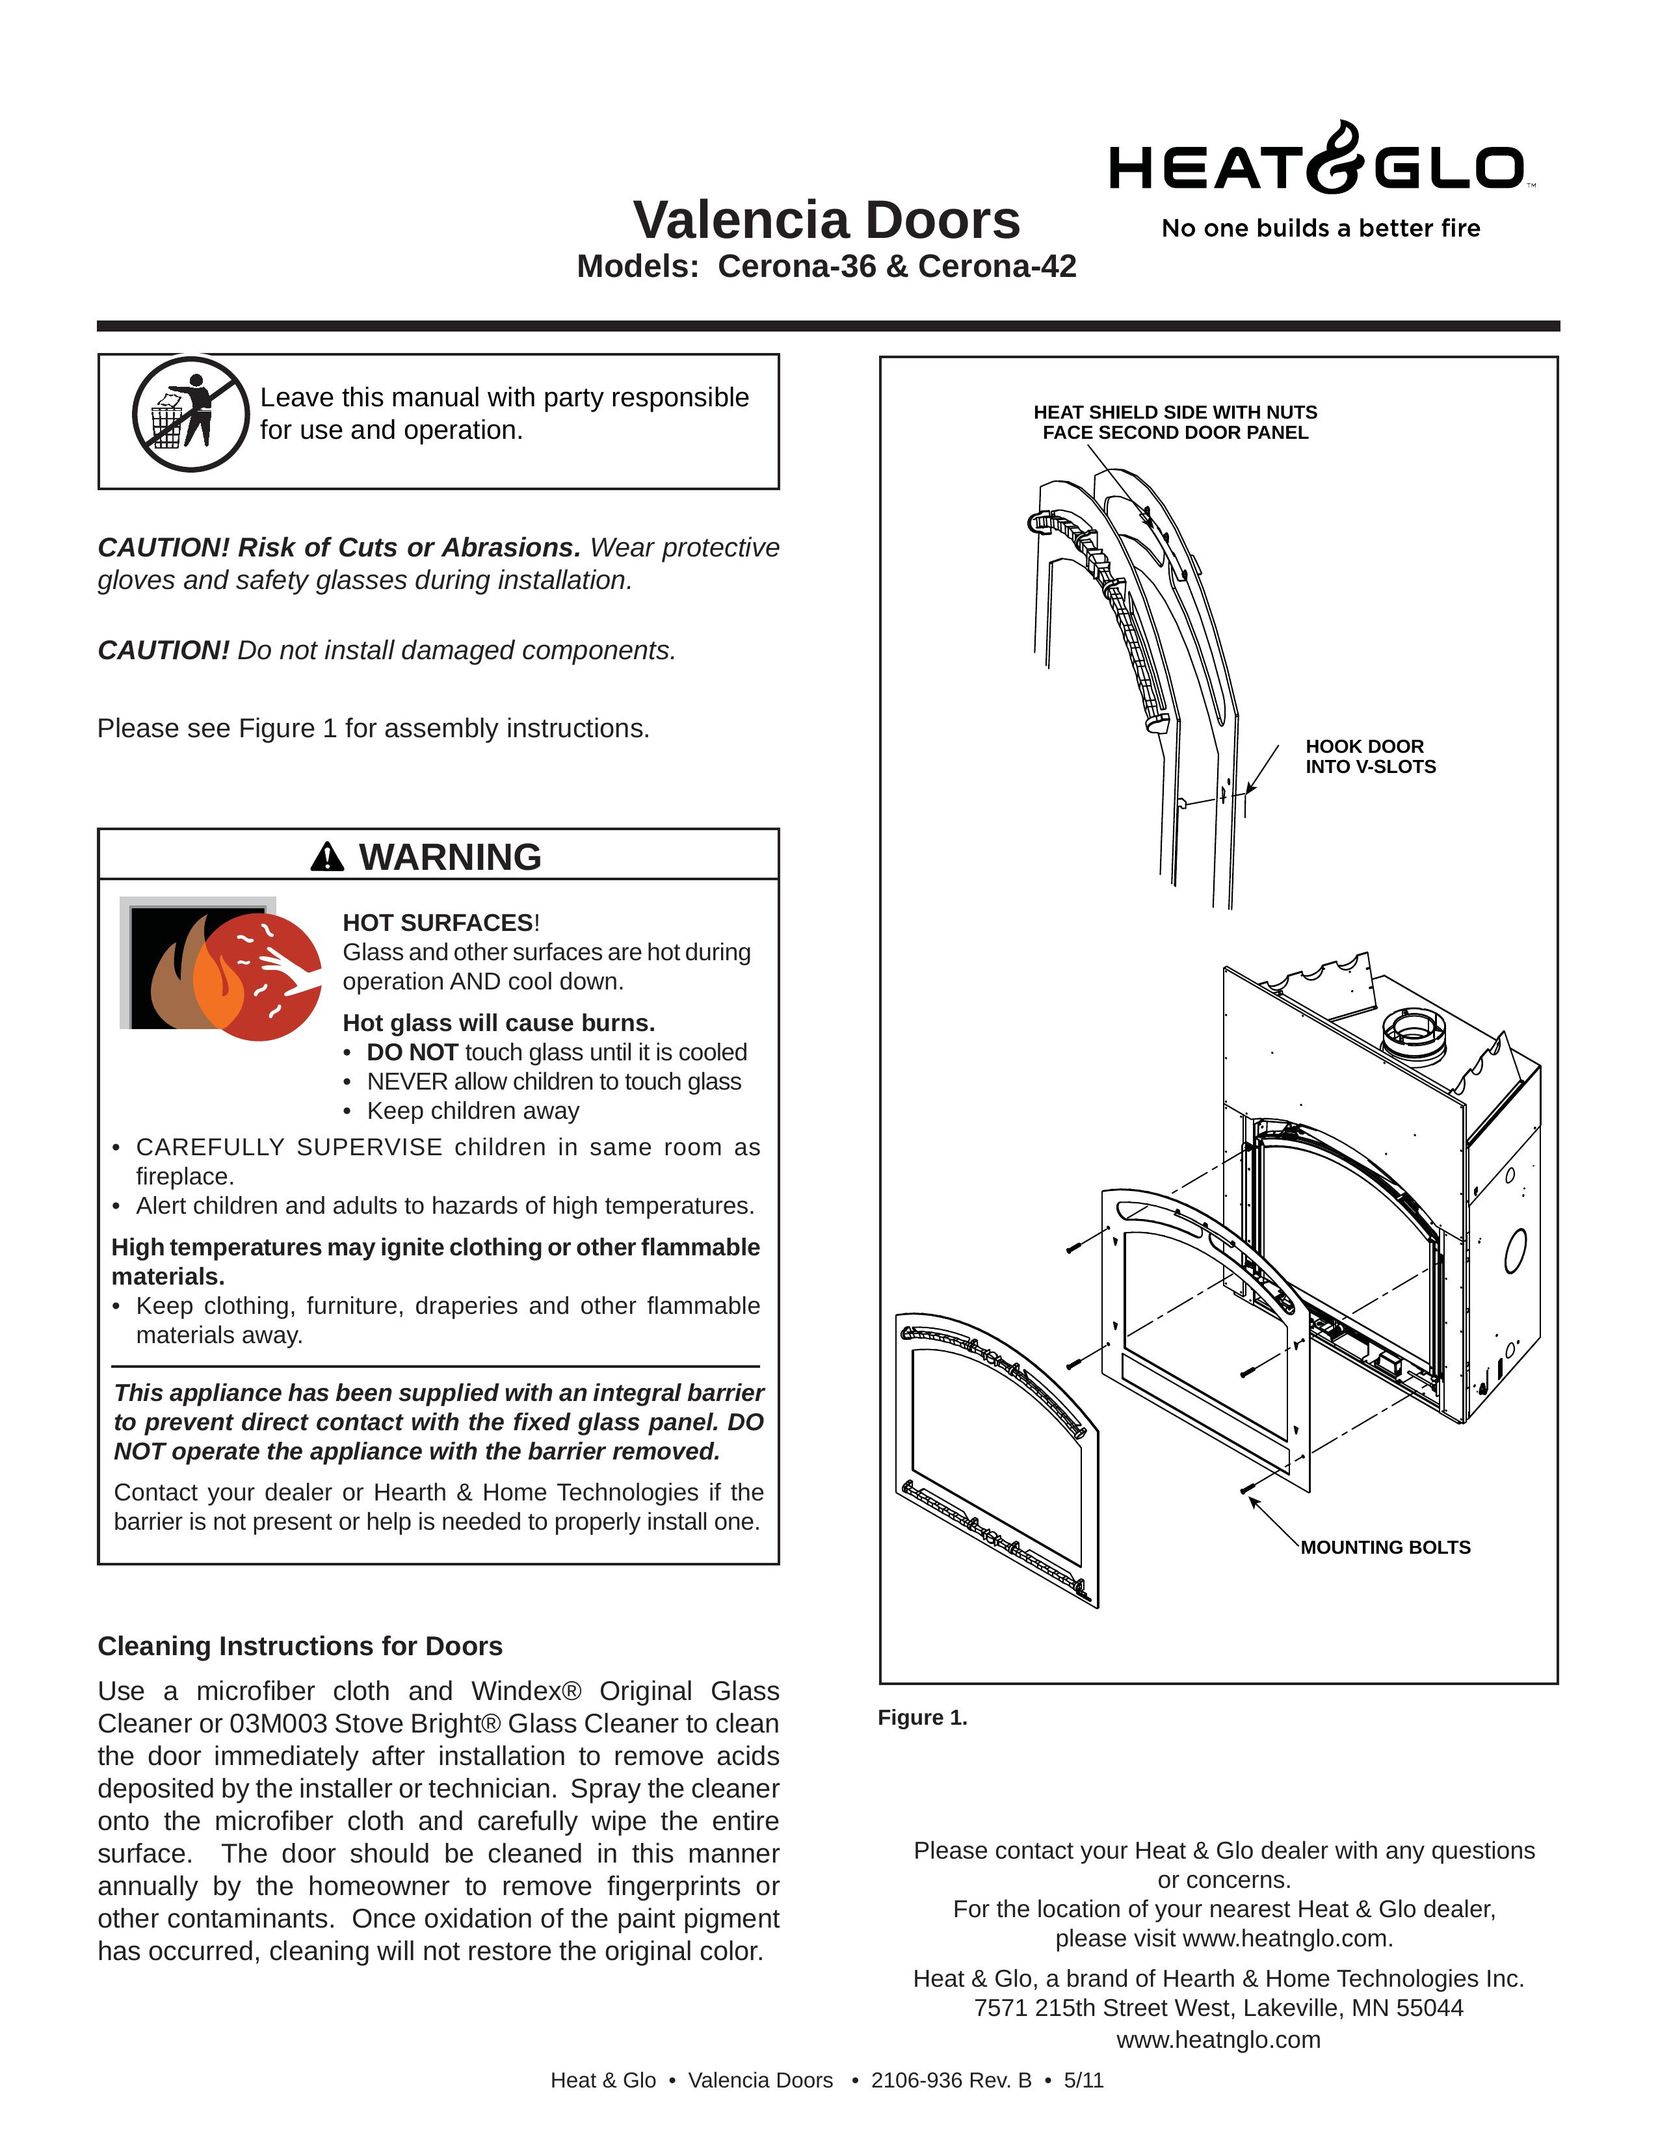 Heat & Glo LifeStyle CERONA-36 Door User Manual